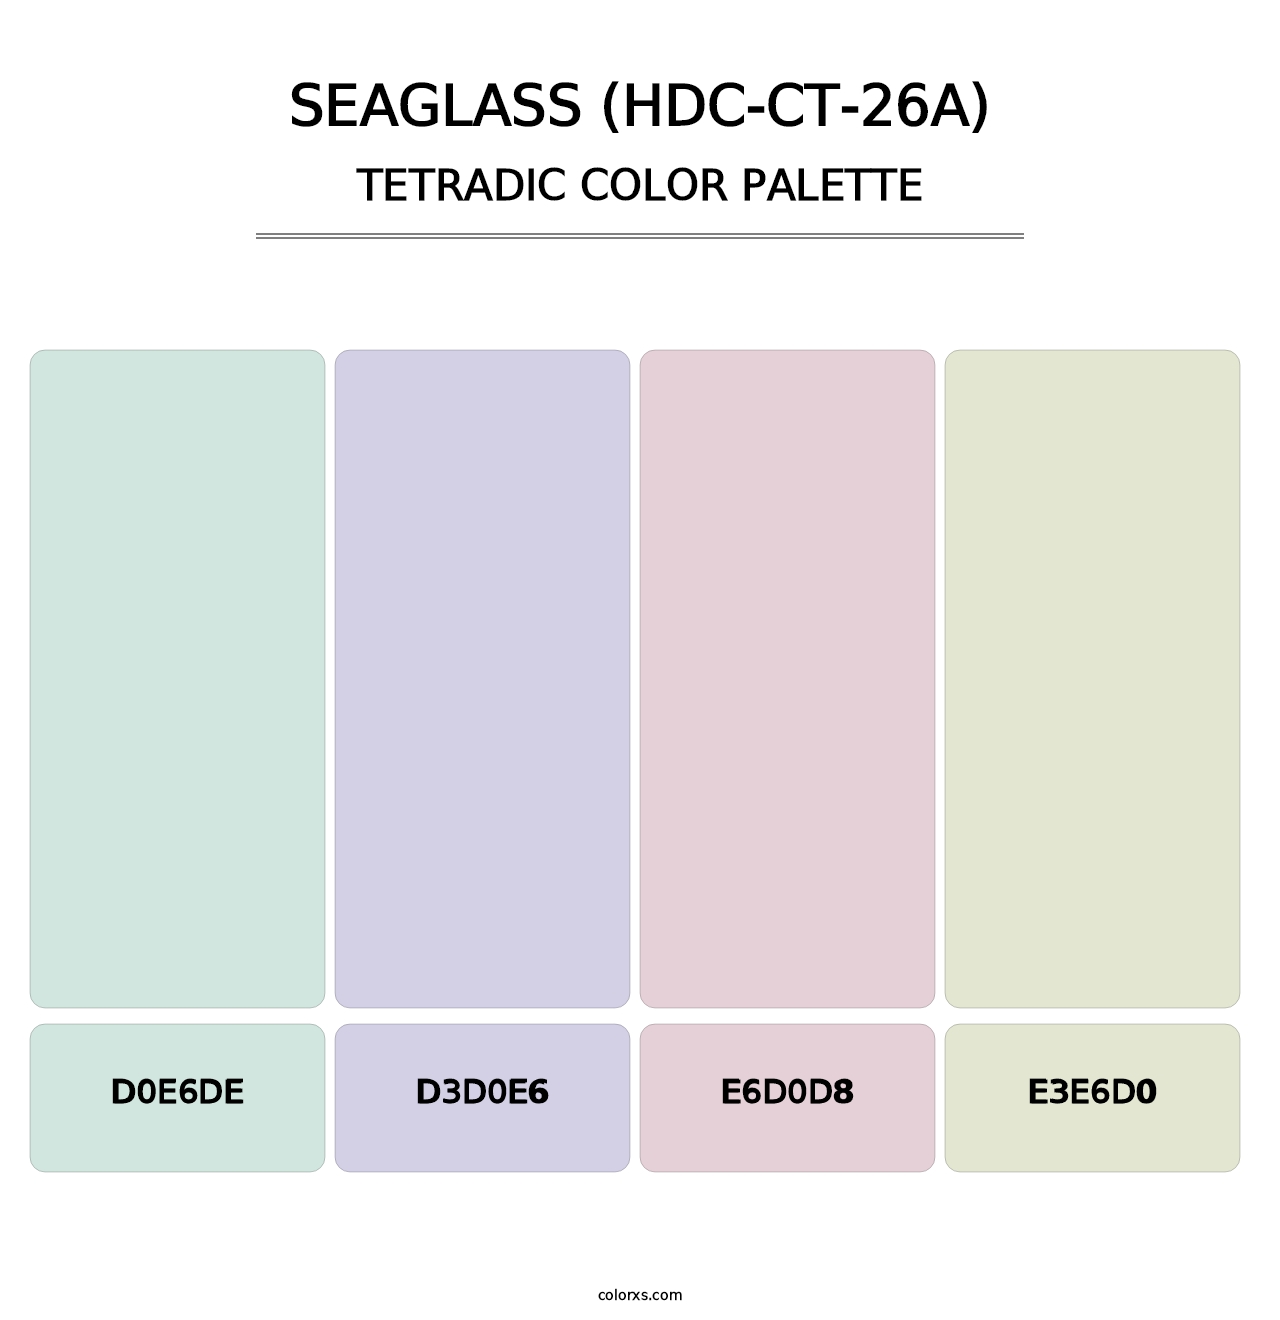 Seaglass (HDC-CT-26A) - Tetradic Color Palette